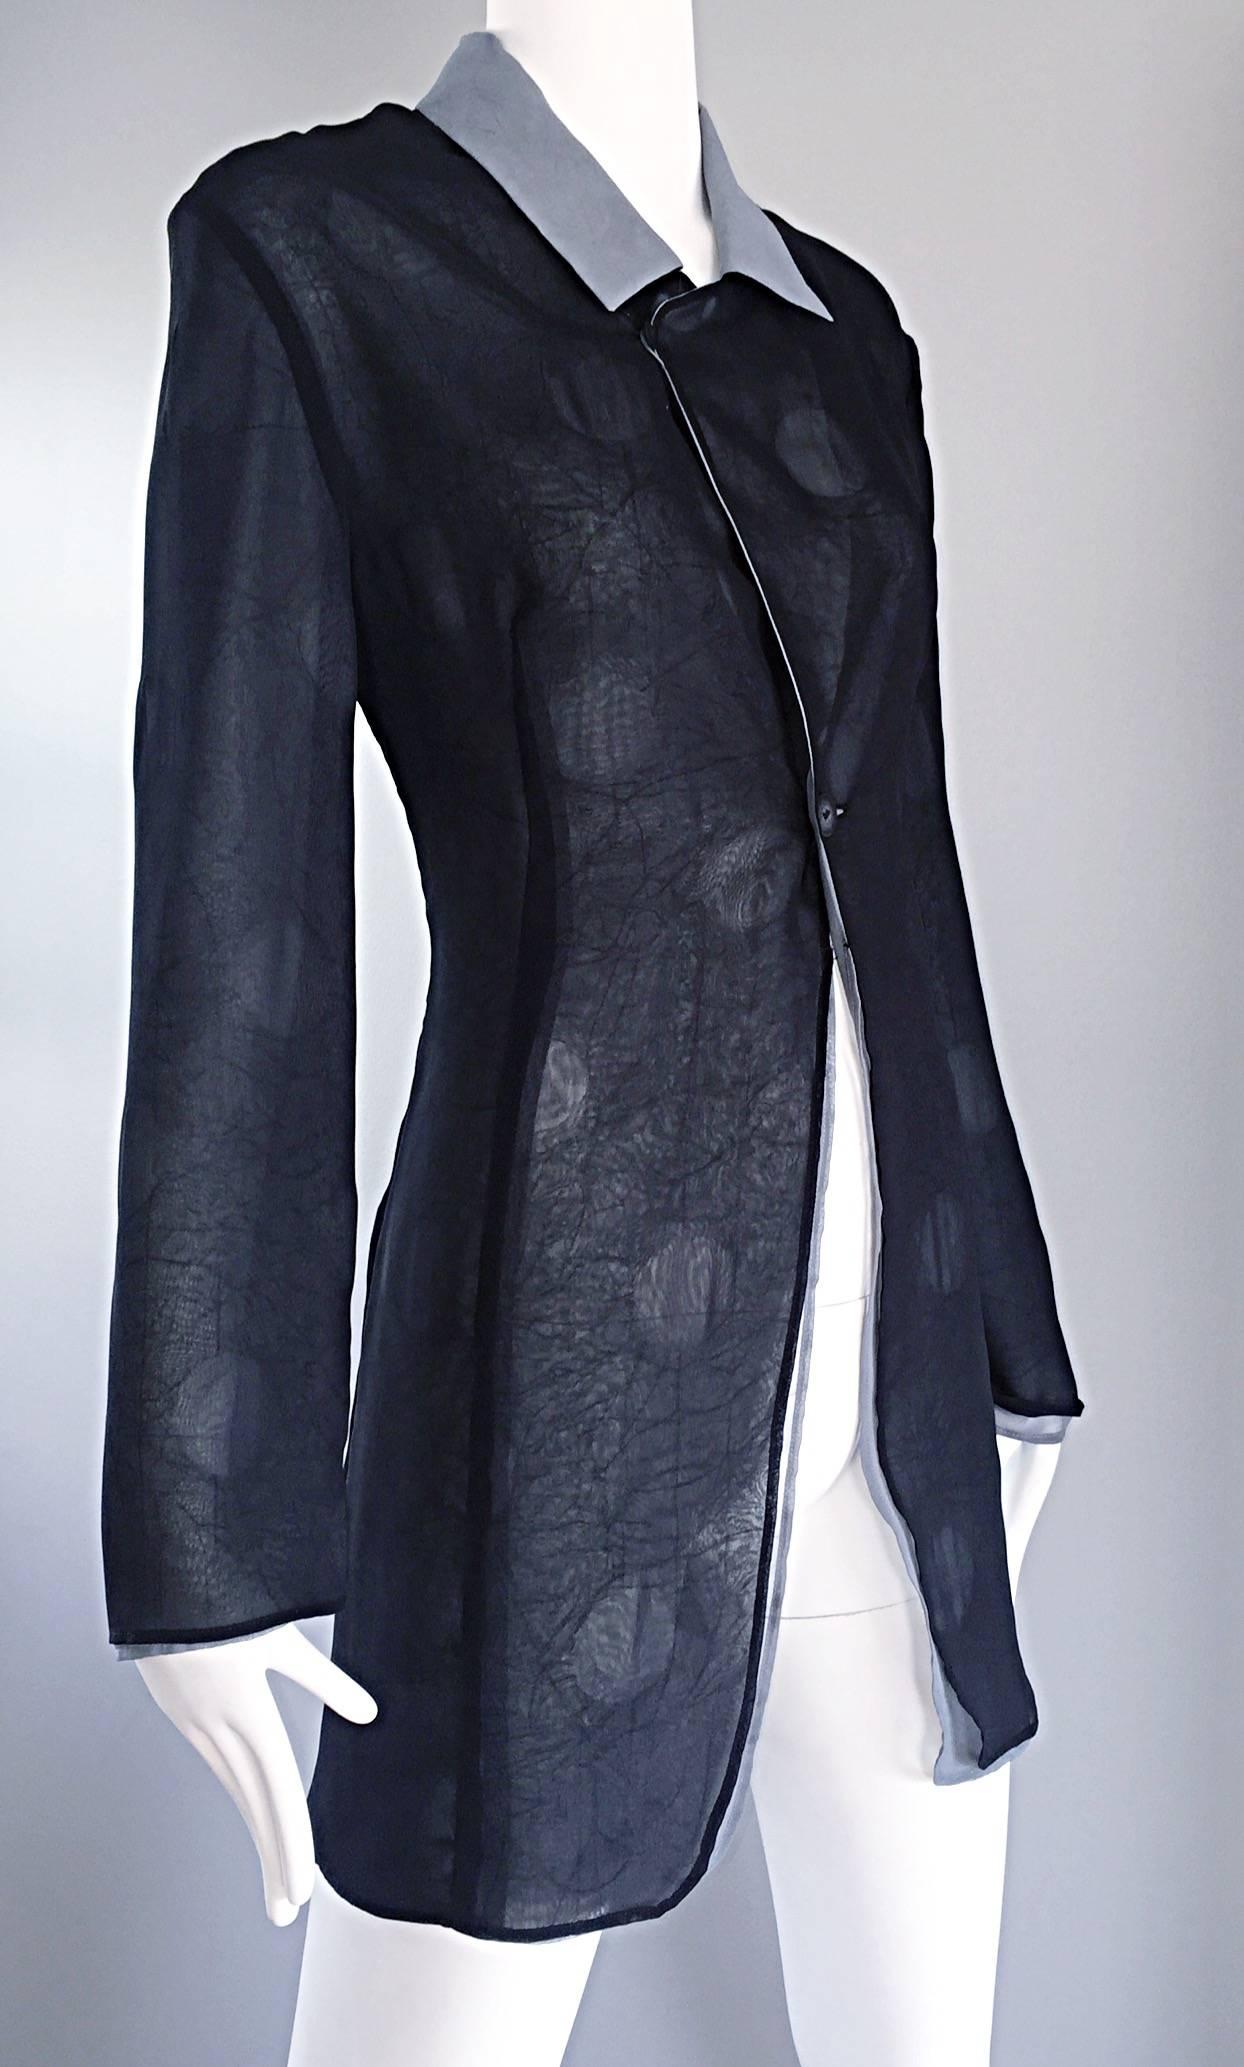 Vintage Matsuda Black and Grey Chiffon Polka Dot Chiffon Avant Garde 90s Jacket  For Sale 1